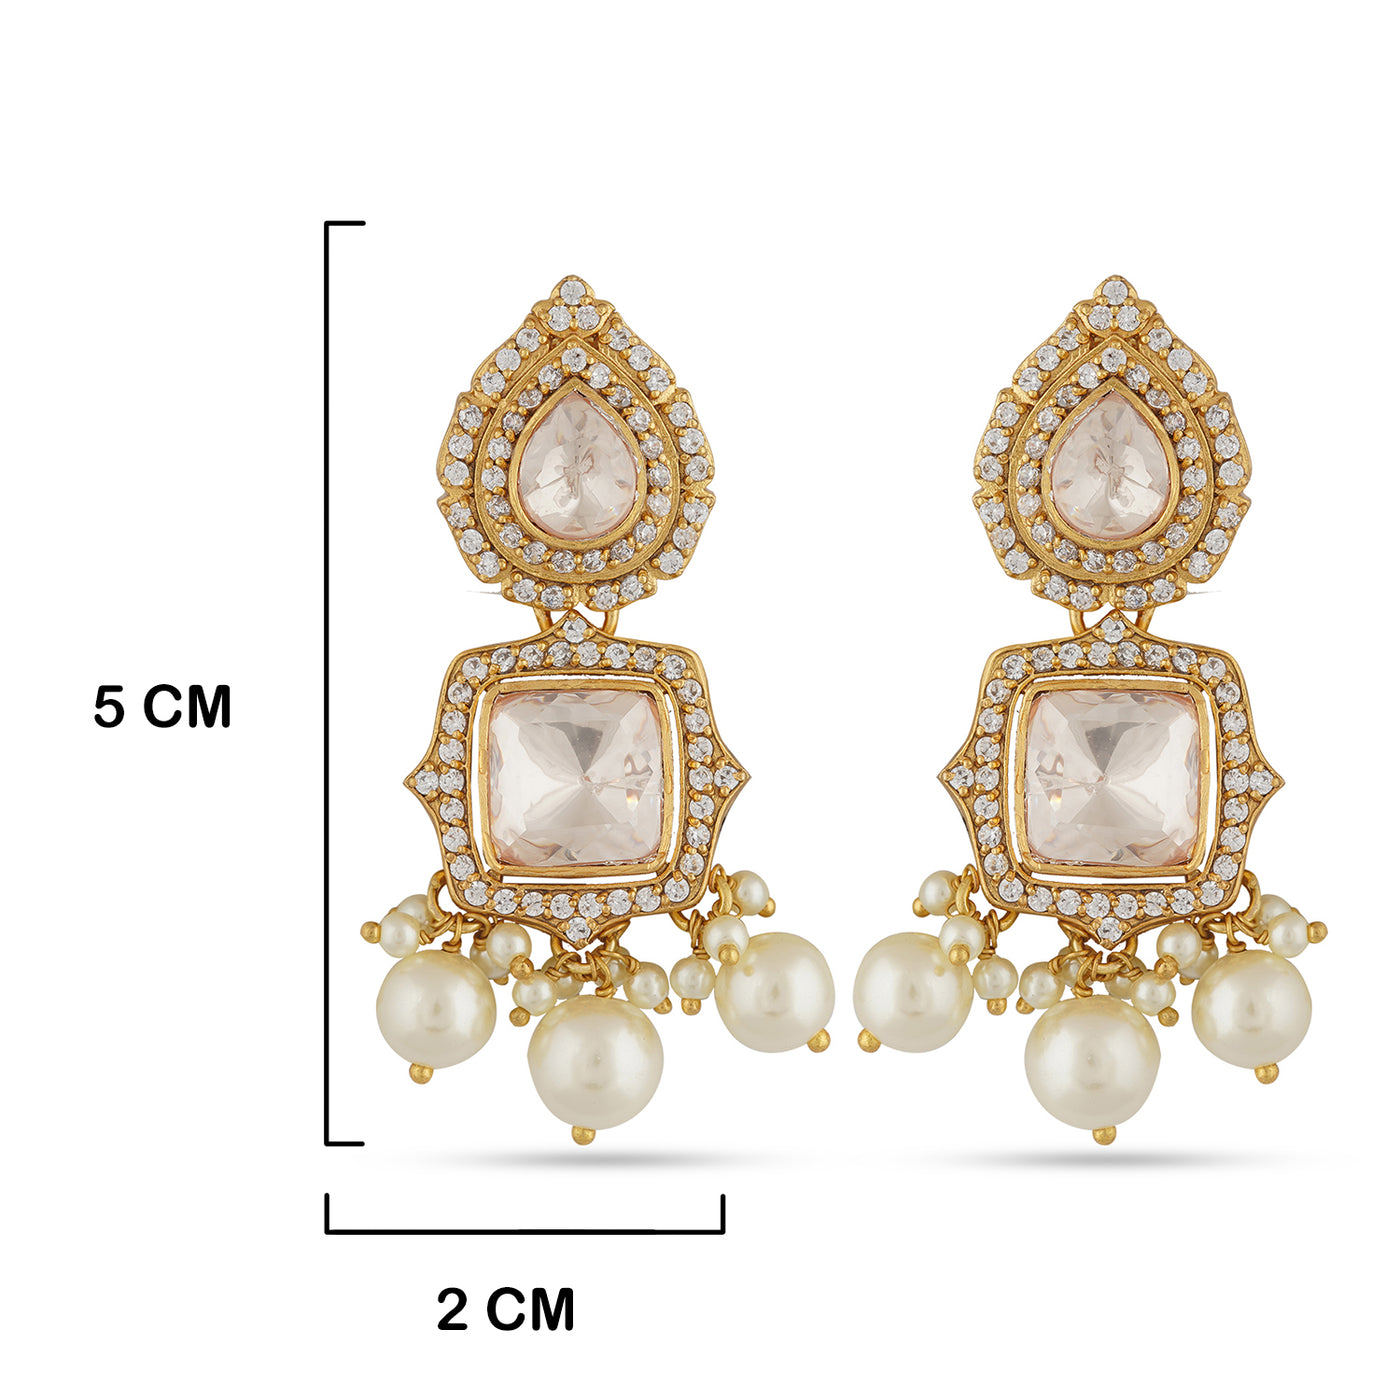 Polki and Kundan Earrings with measurements in cm. 5cm by 2cm.